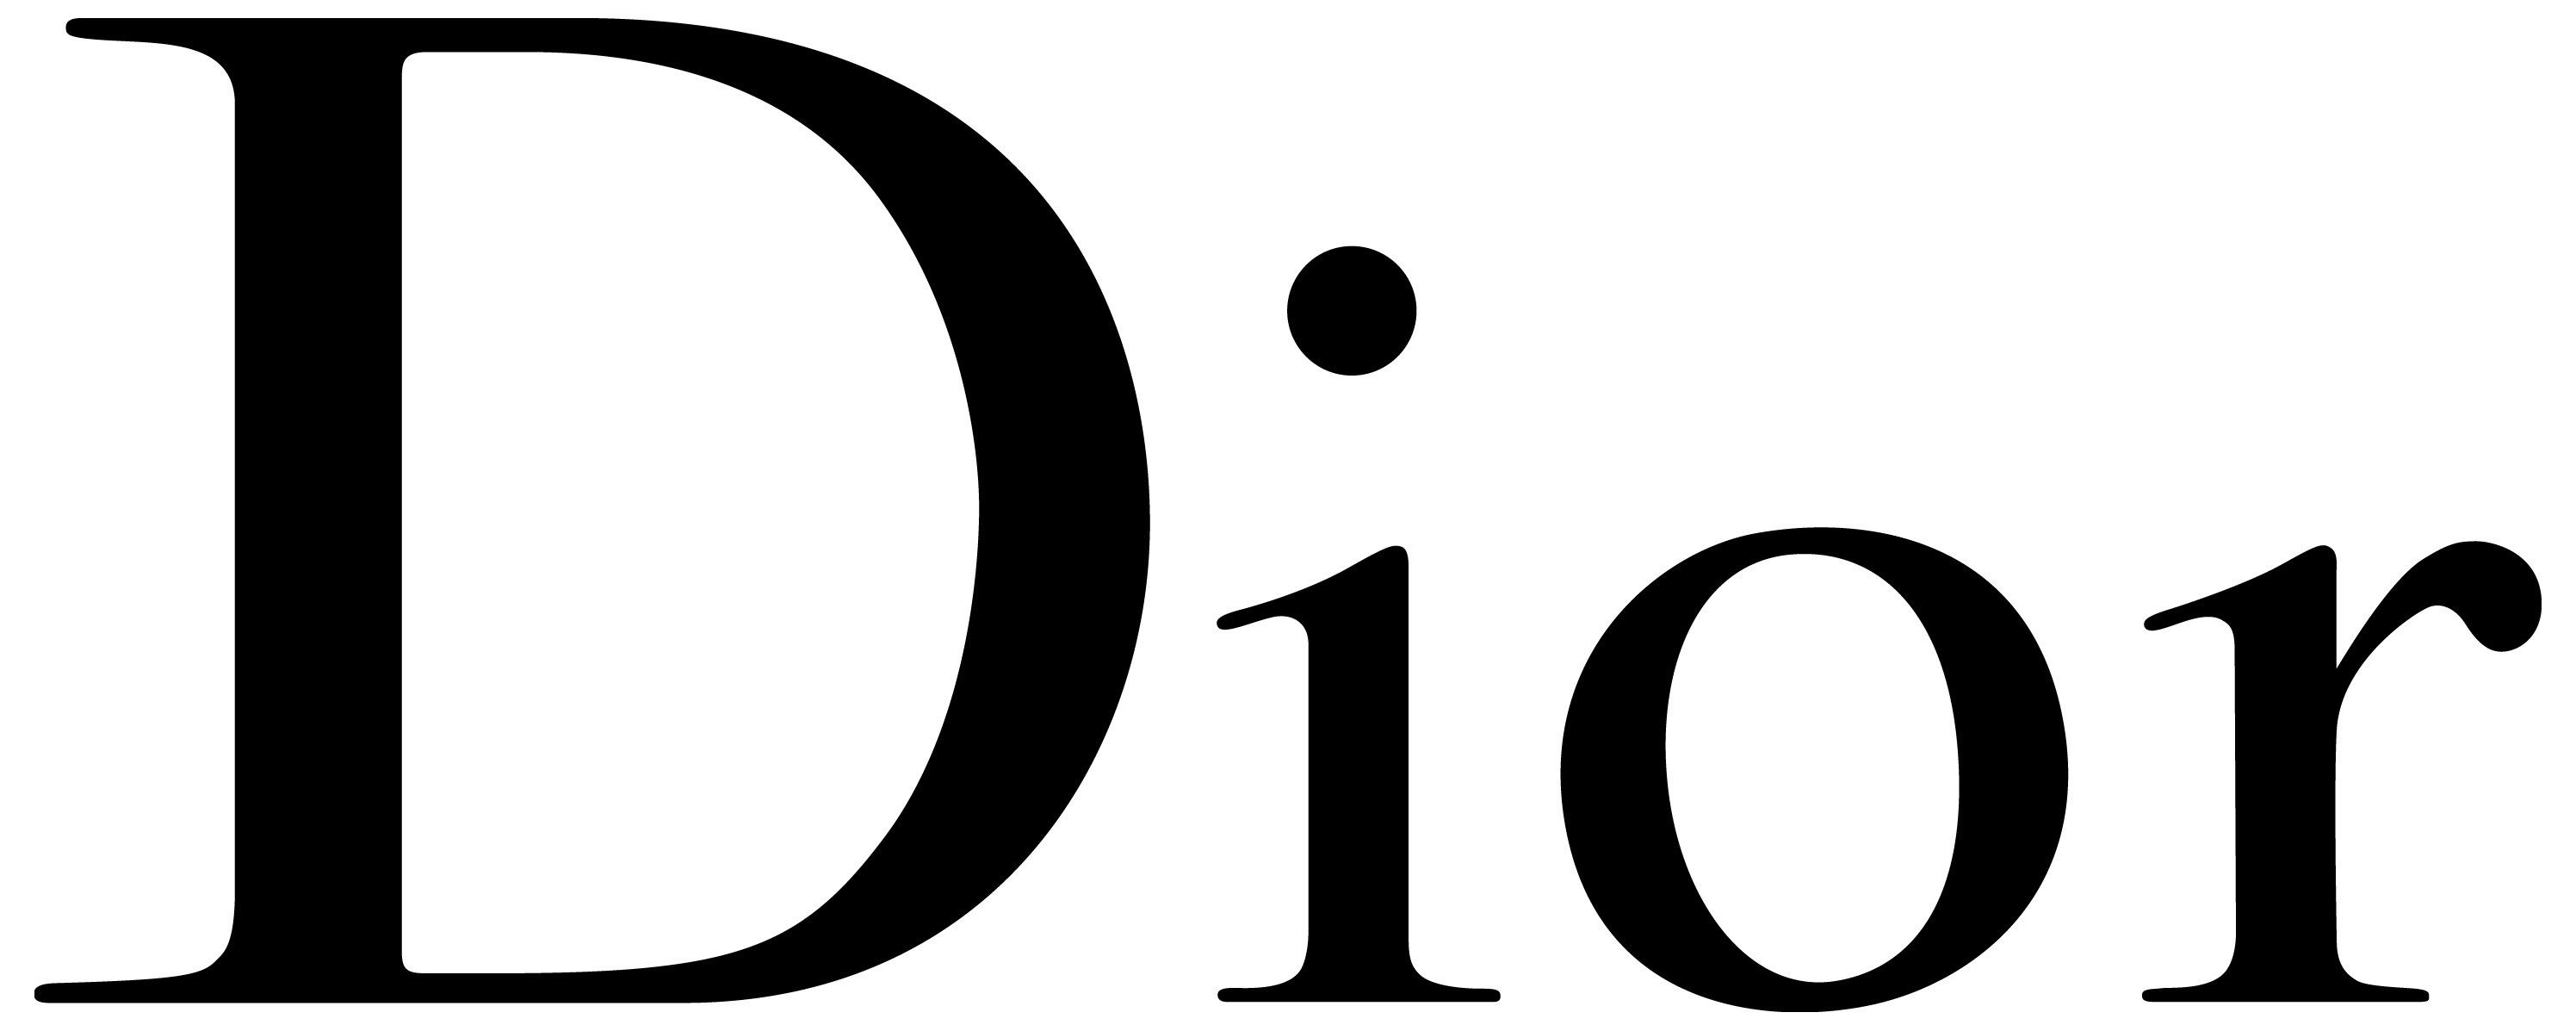 ماركة ديور Dior